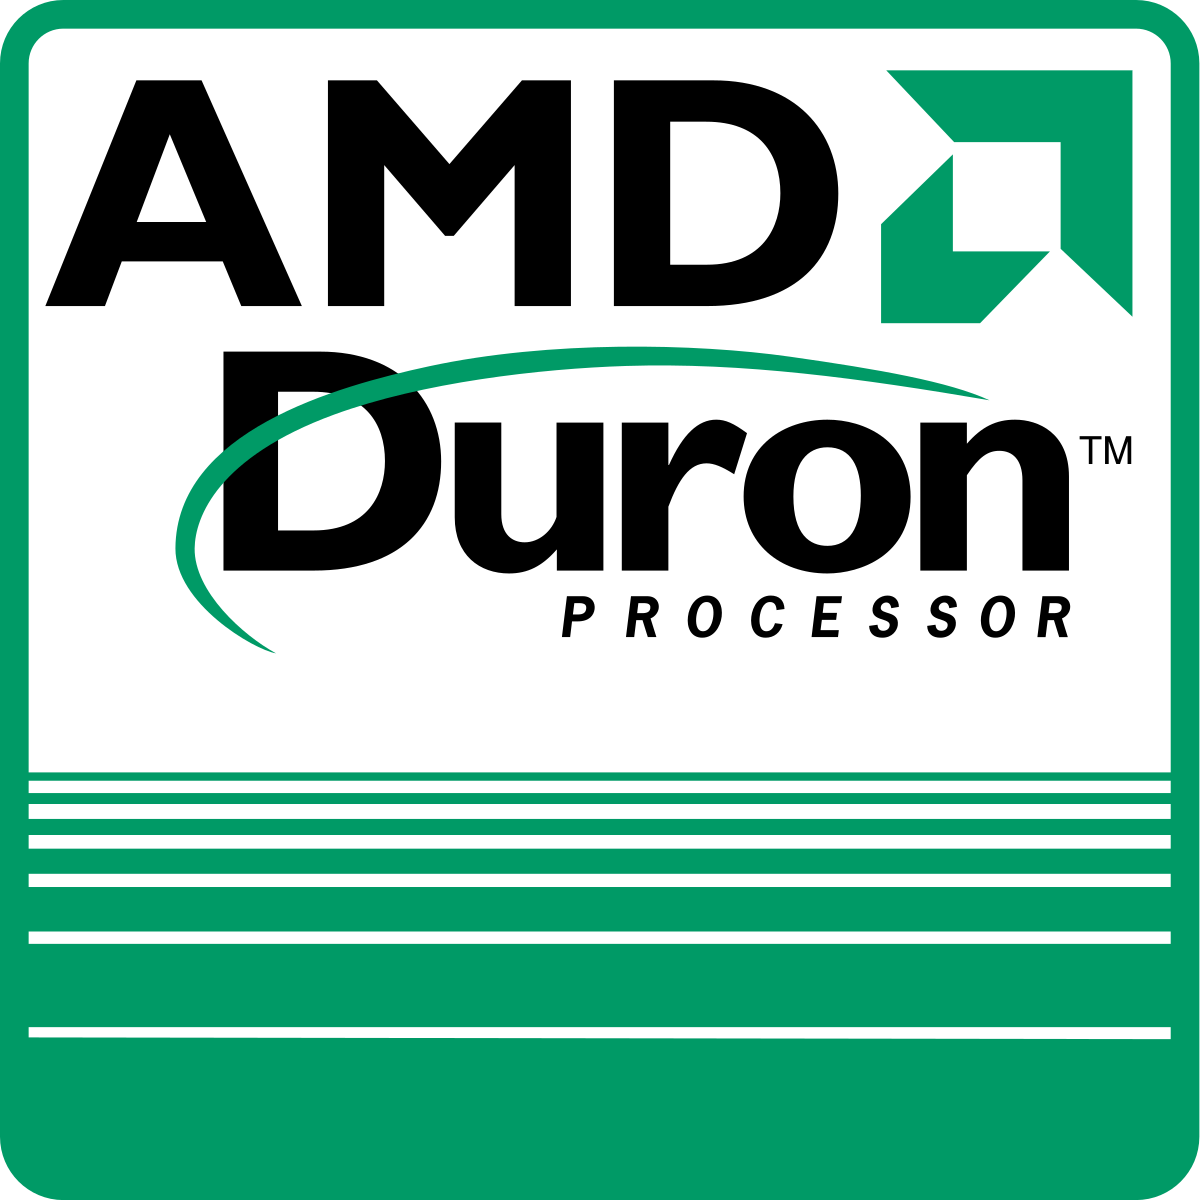 AMD Duron CPU logo.